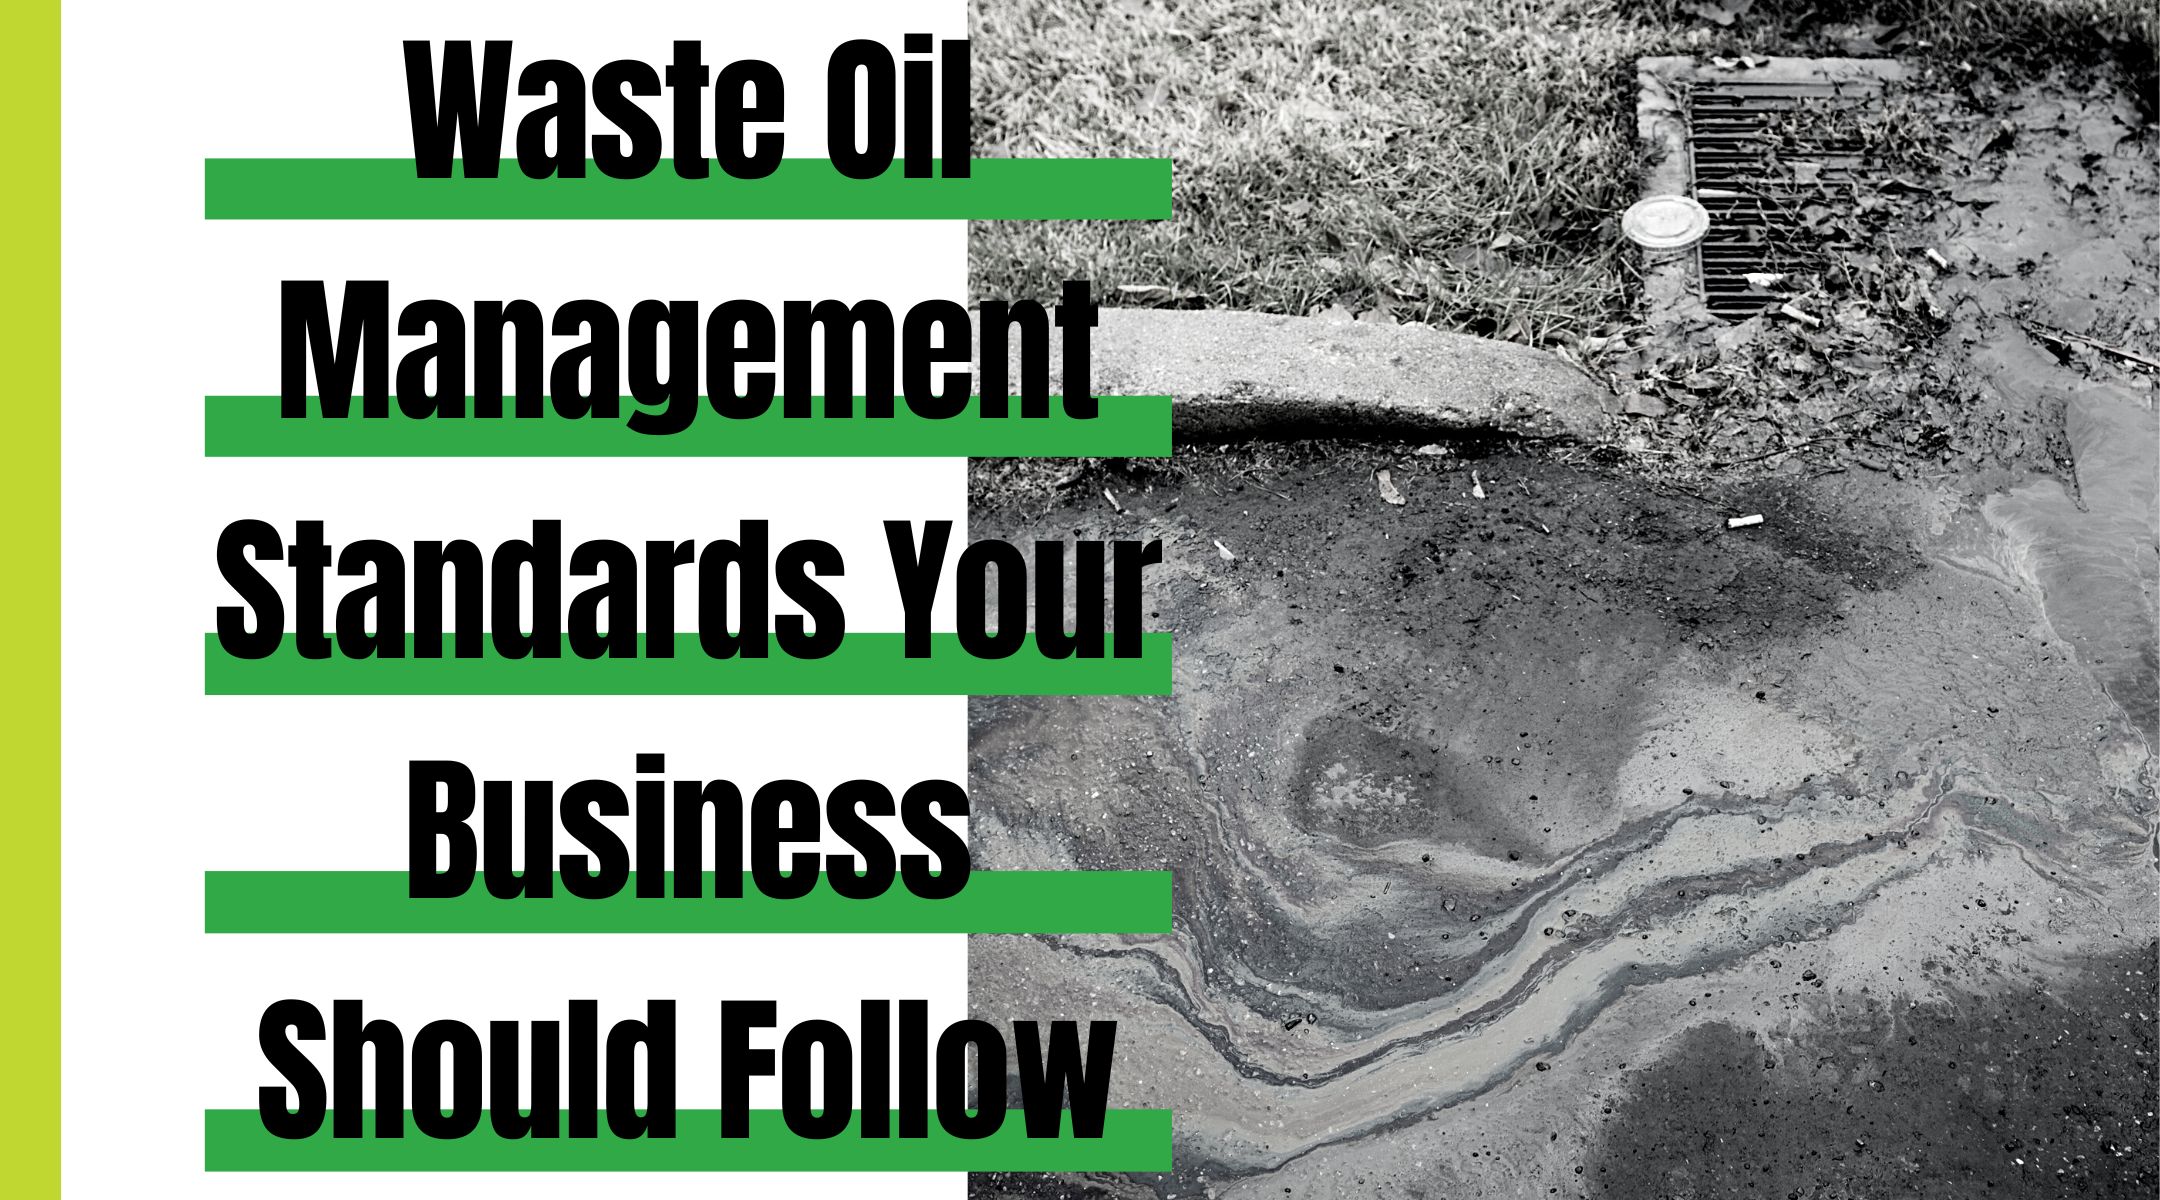 Waste Oil Management Standards Your Business Should Follow